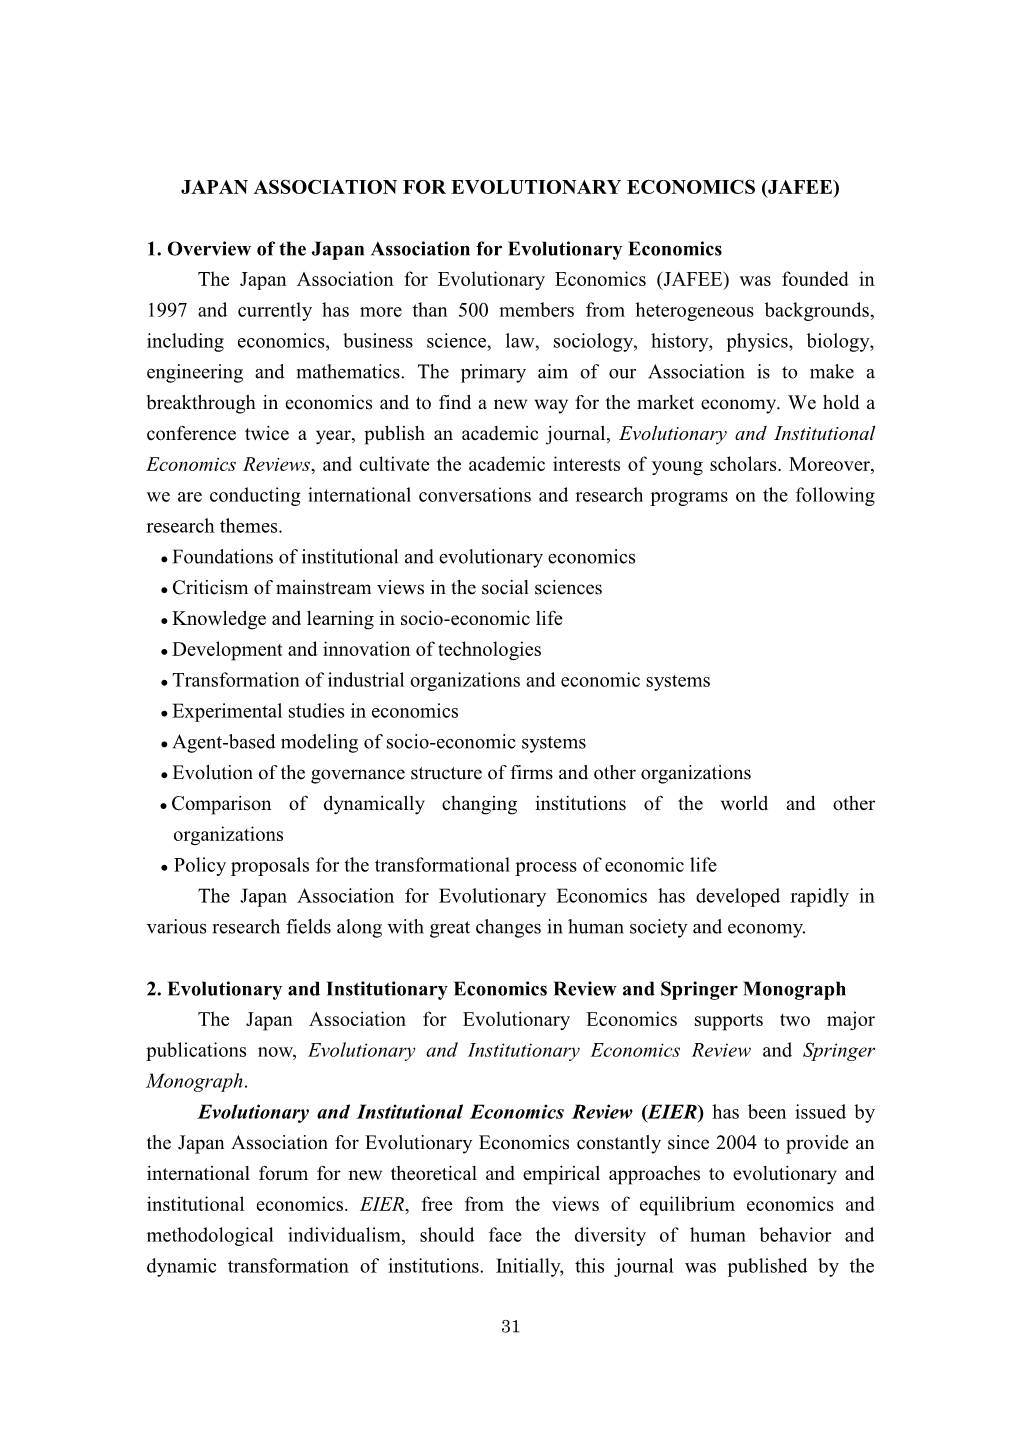 Japan Association for Evolutionary Economics (Jafee)